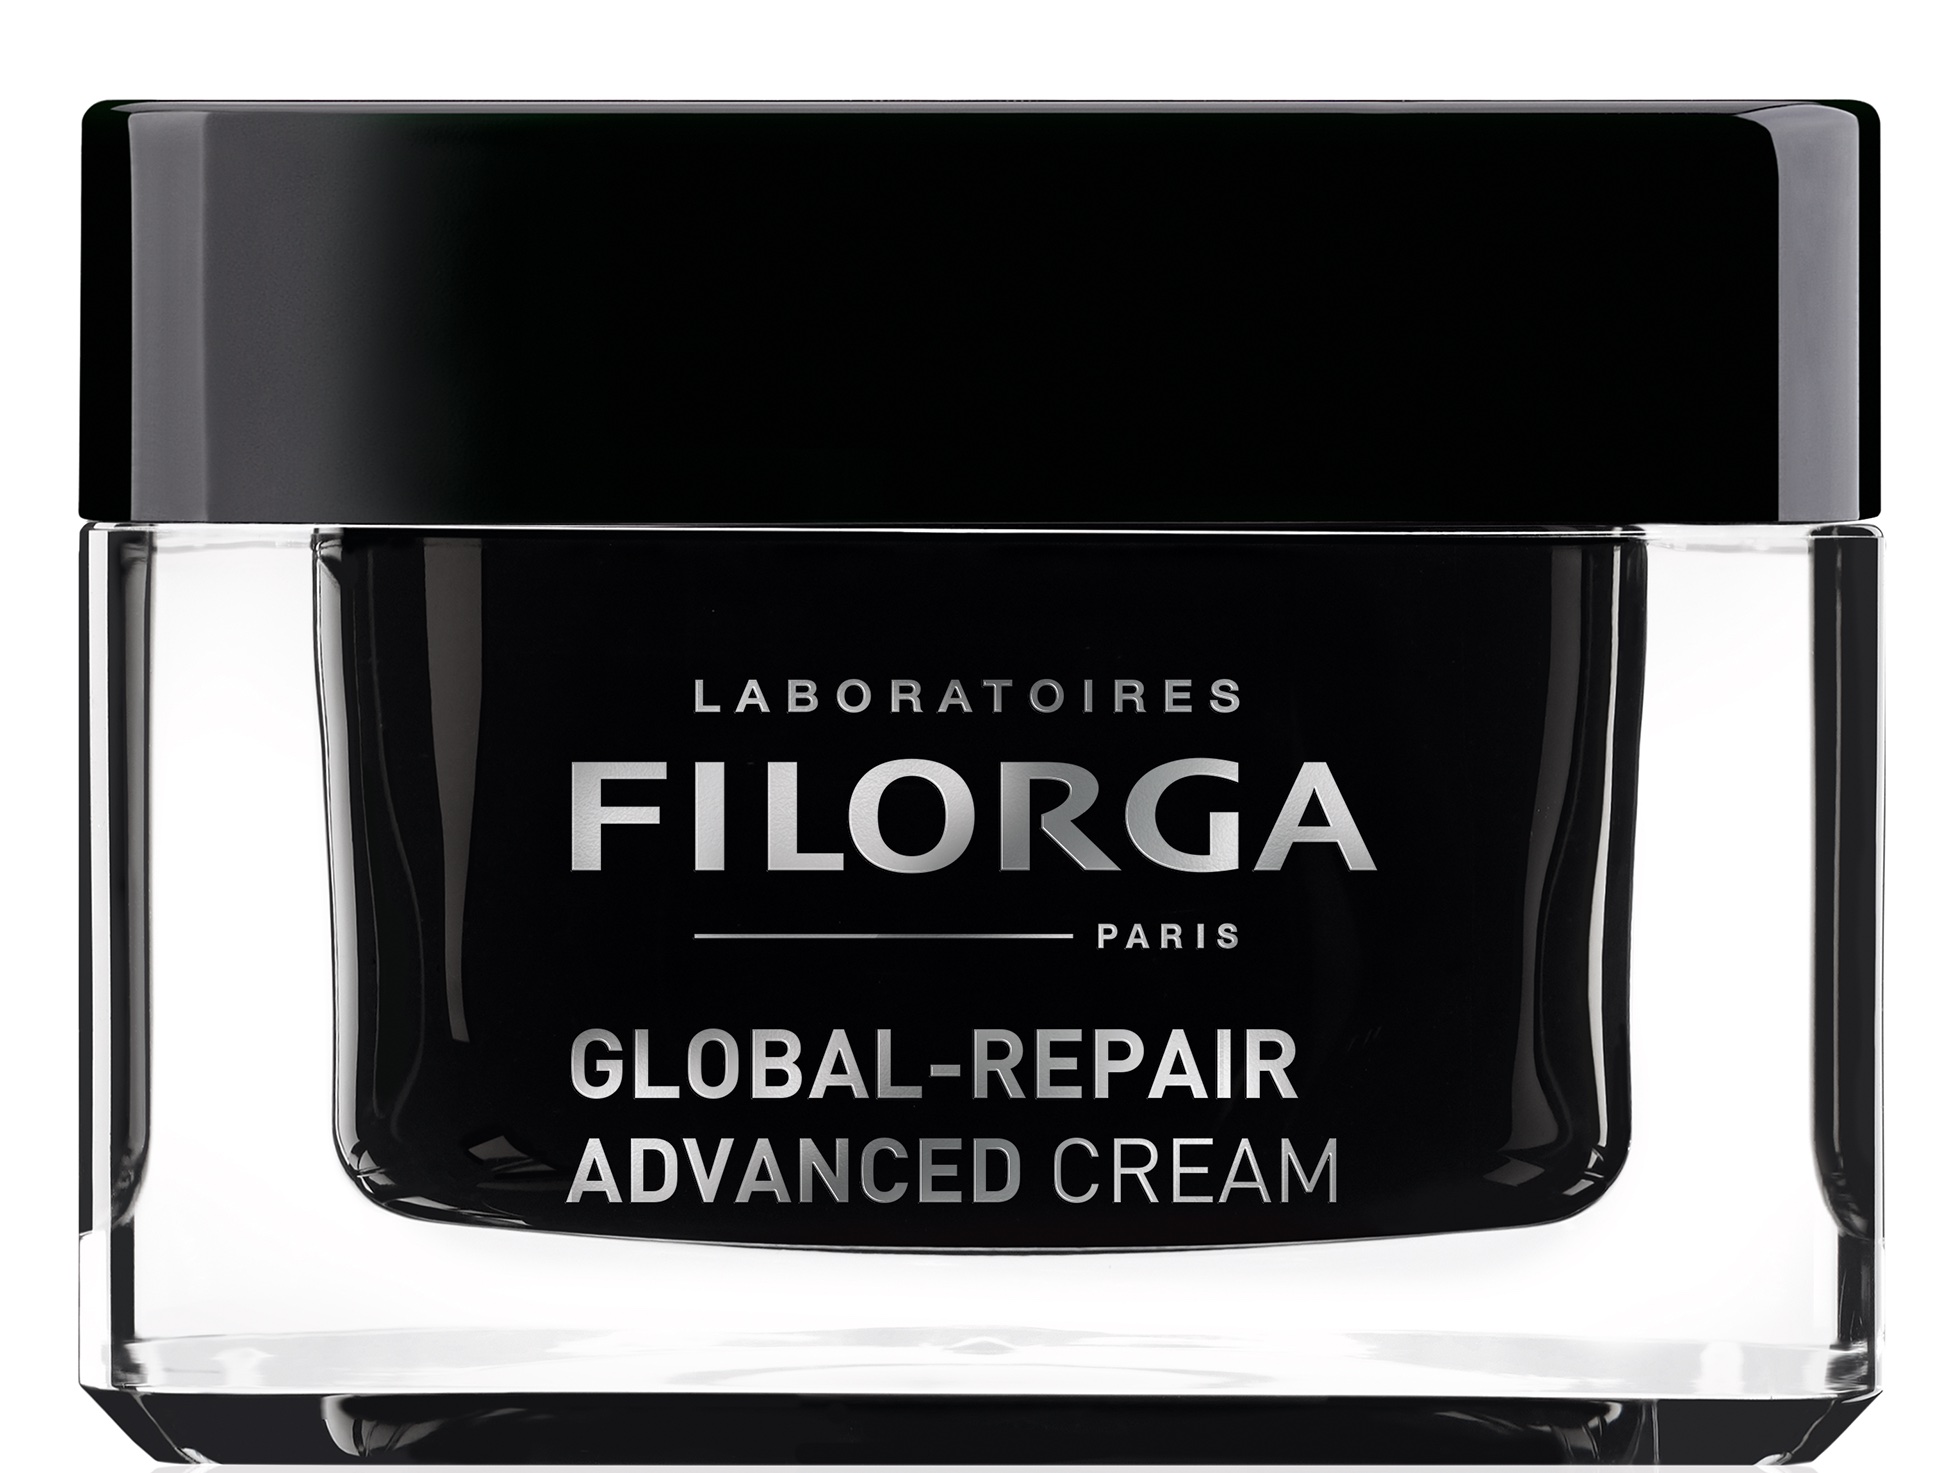 Billede af Filorga Global-Repair Advanced Cream 50 ml.